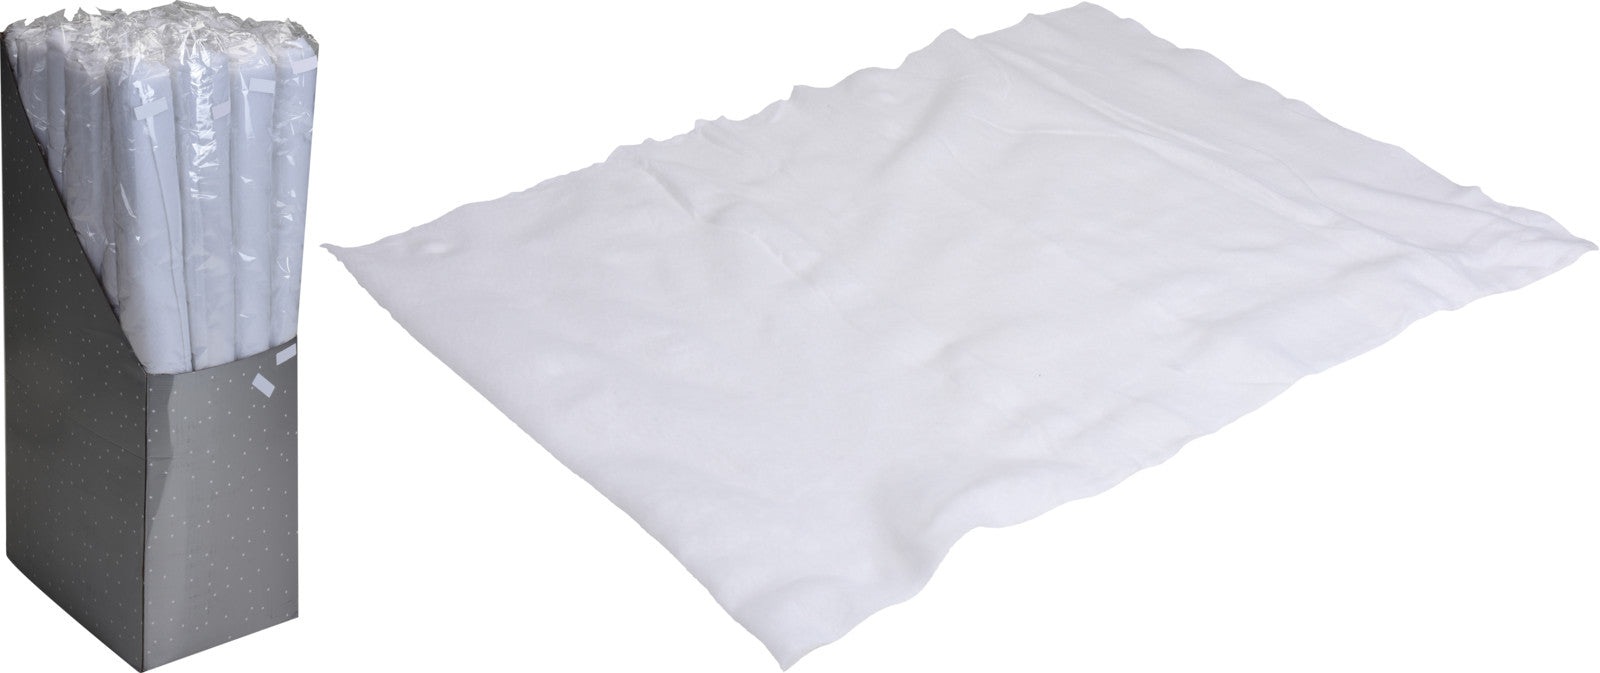 Snowy White Blanket